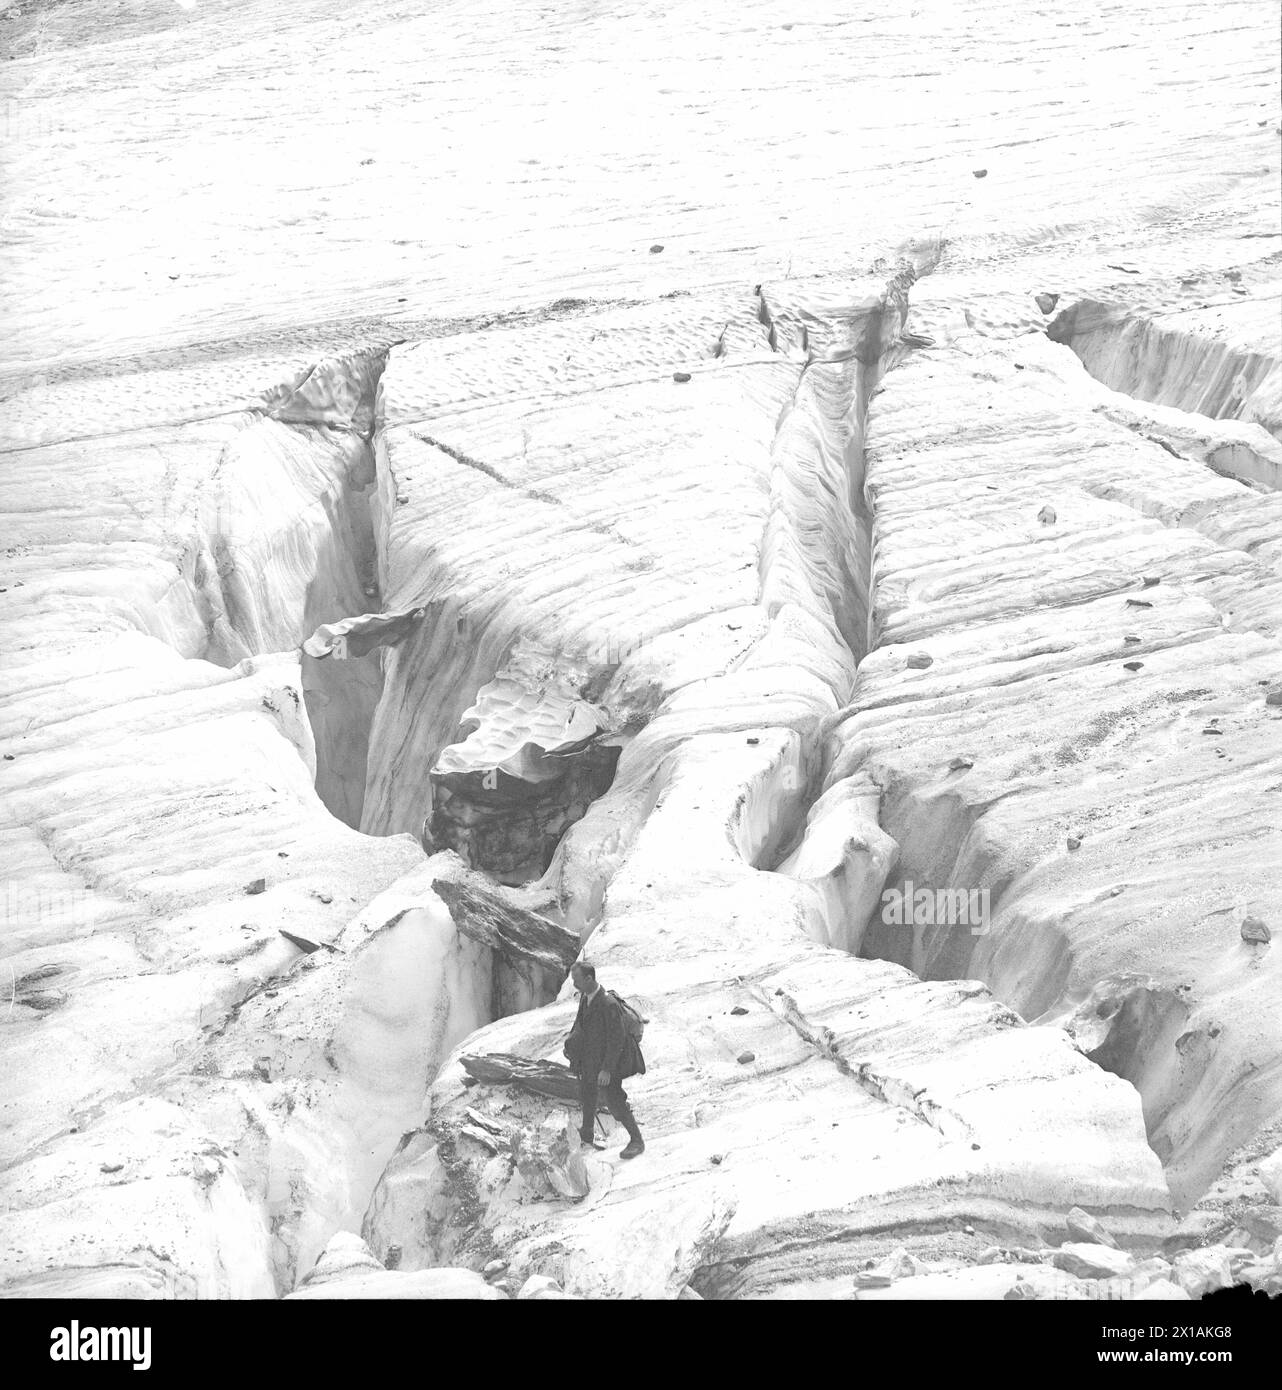 Glockner Gruppe, Gletscherspalte am Karlinger Gletscher am Kaprunertoerl (Peak), 1920 - 19200101 PD2291 - Rechteinfo: Rights Managed (RM) Stockfoto